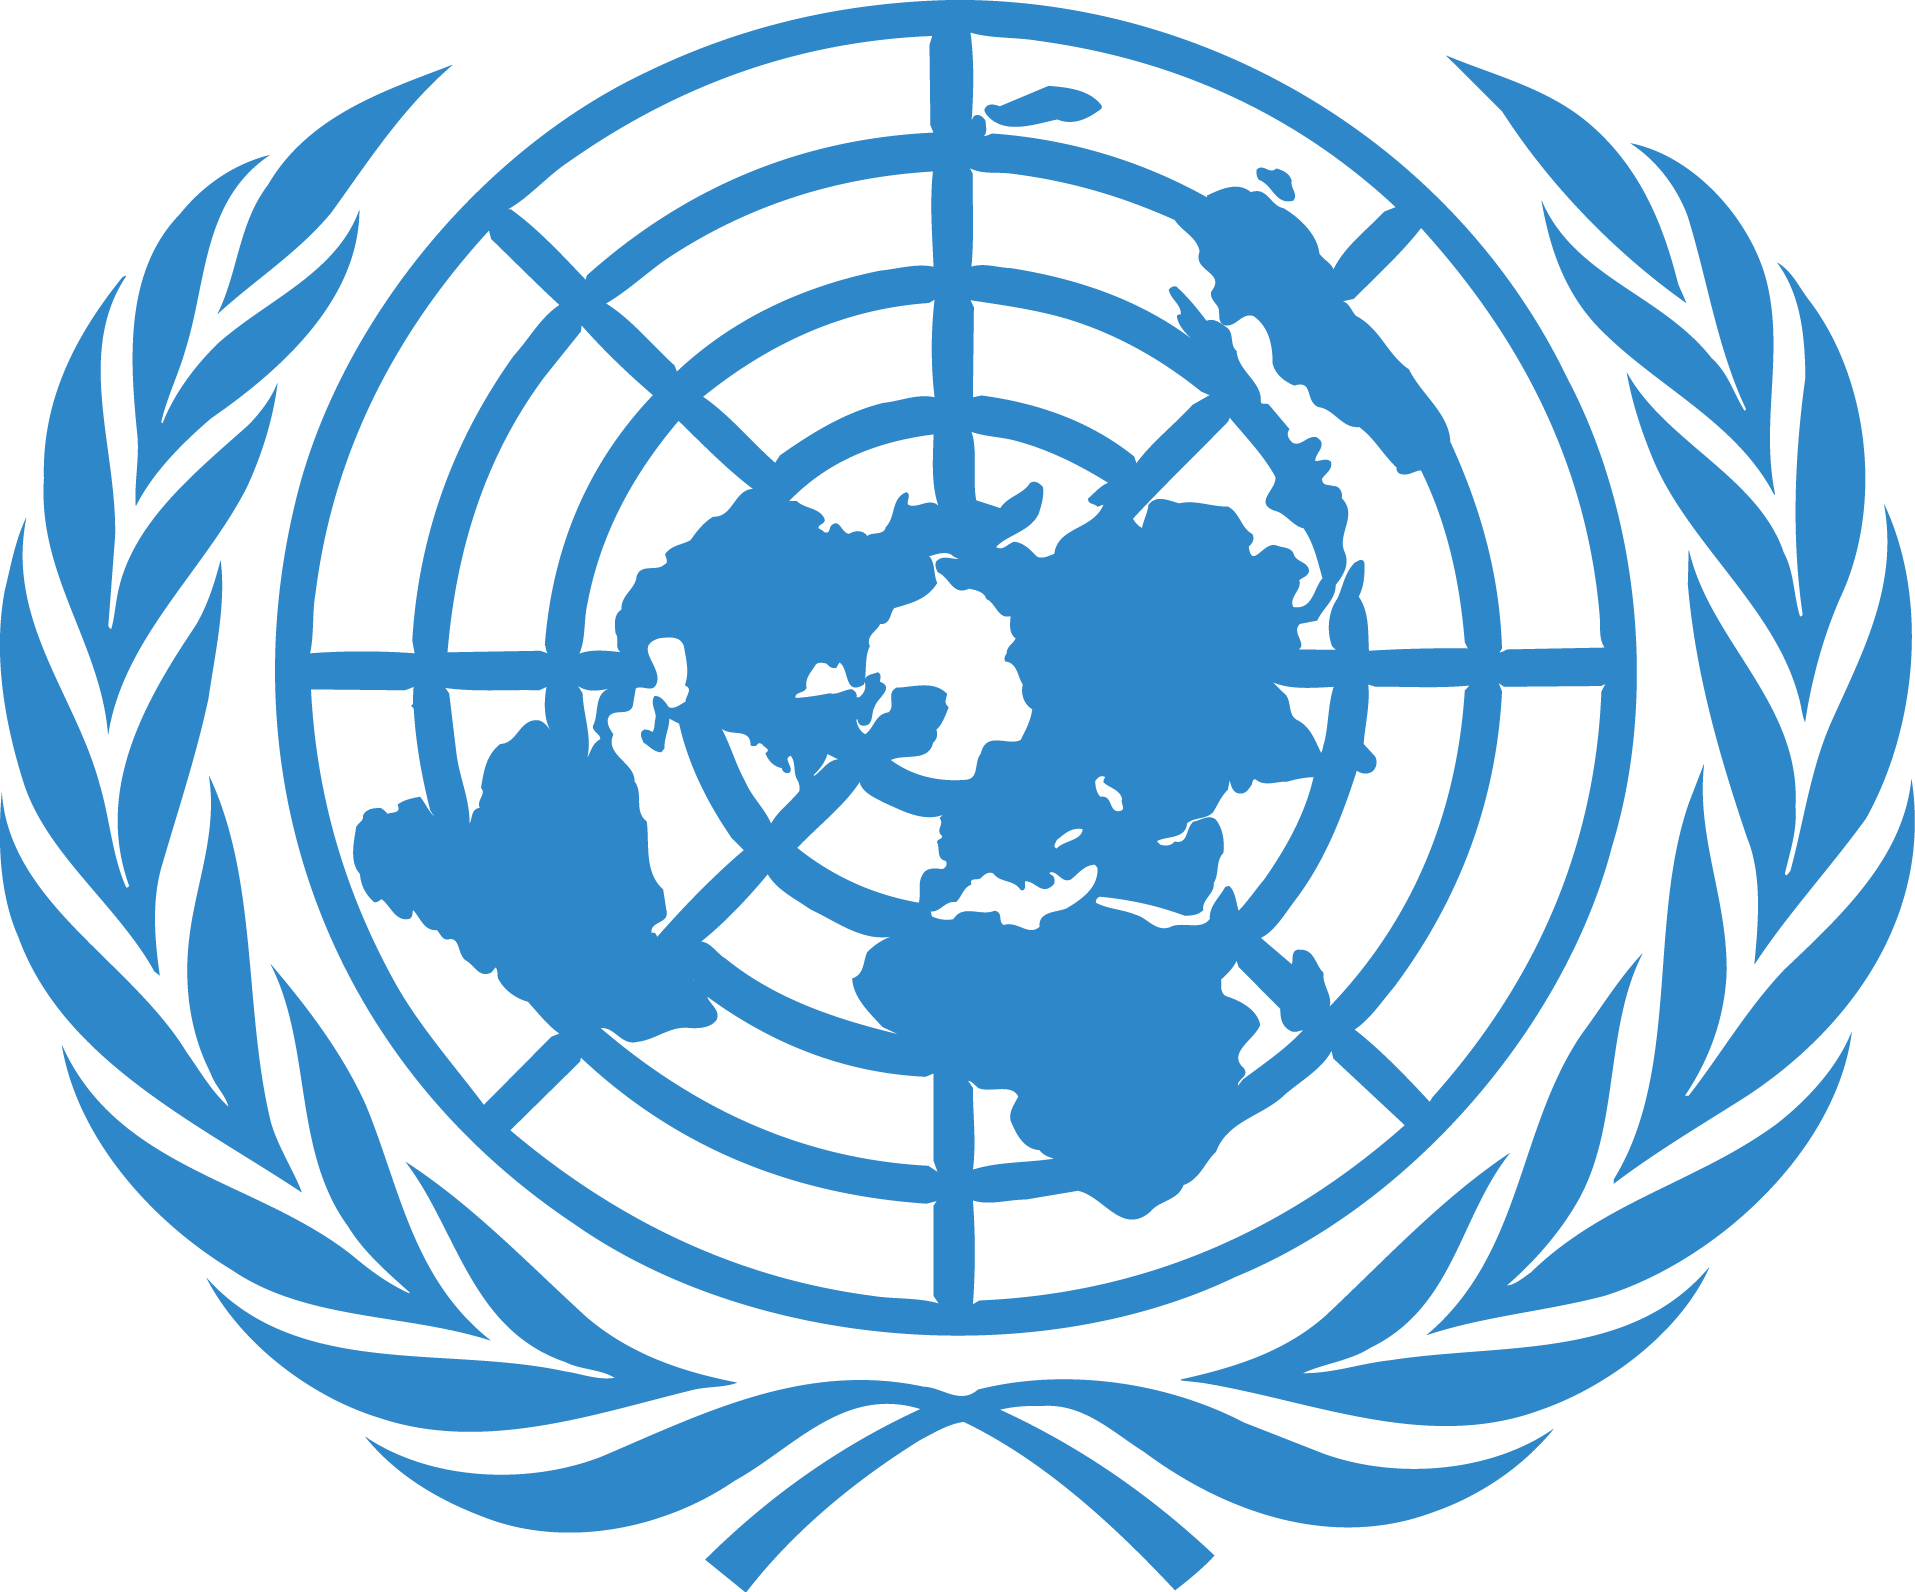 Immagine Trasparente di logo Emblem delle Nazioni Unite